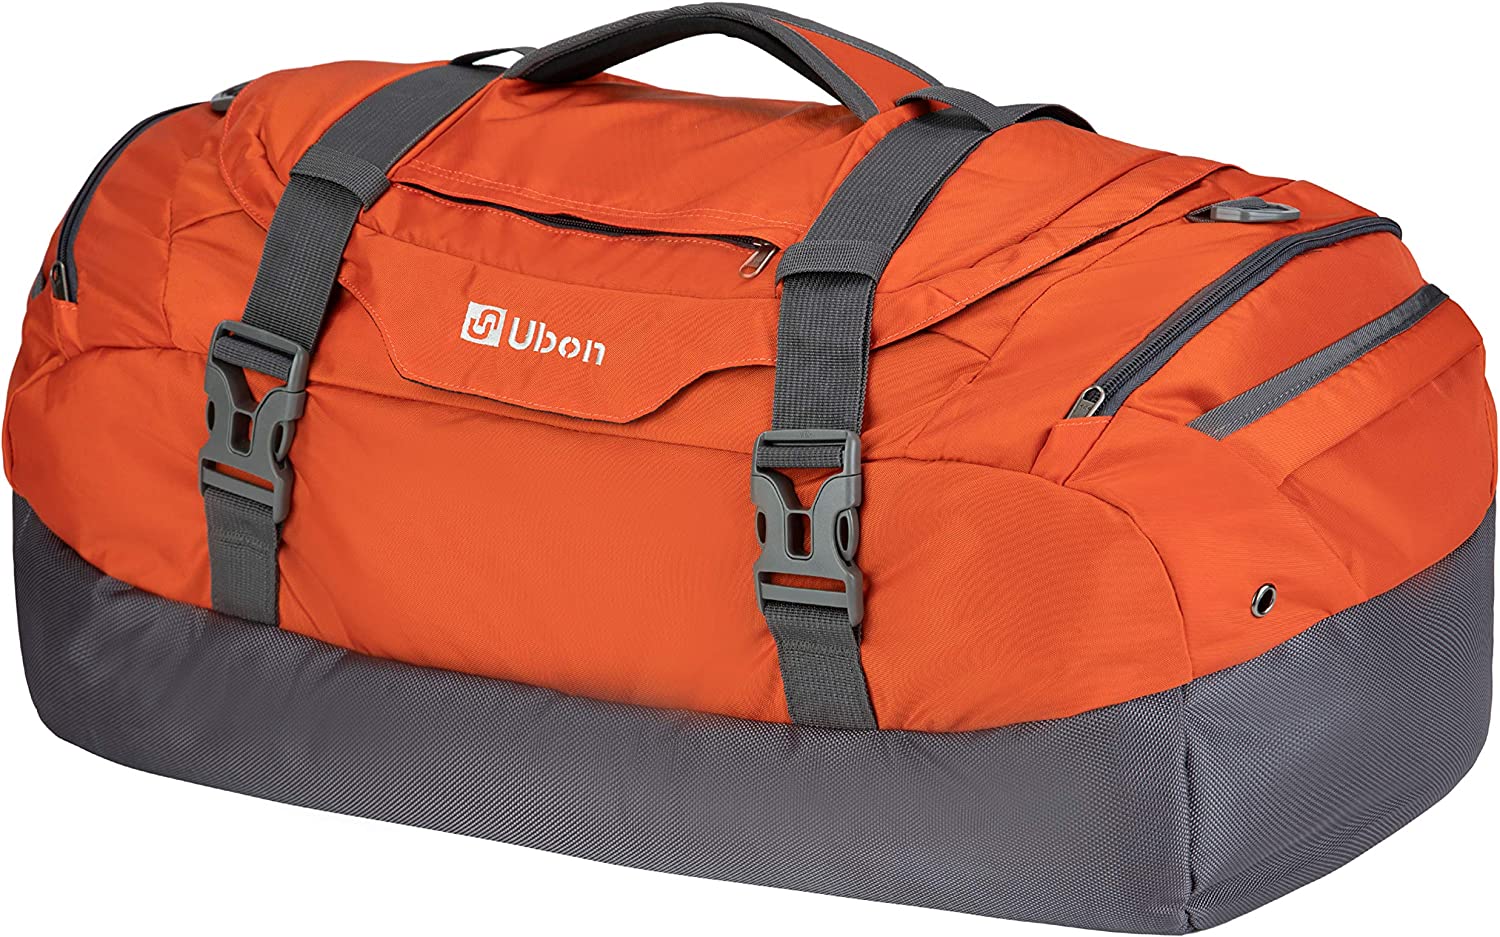 An orange duffel bag.